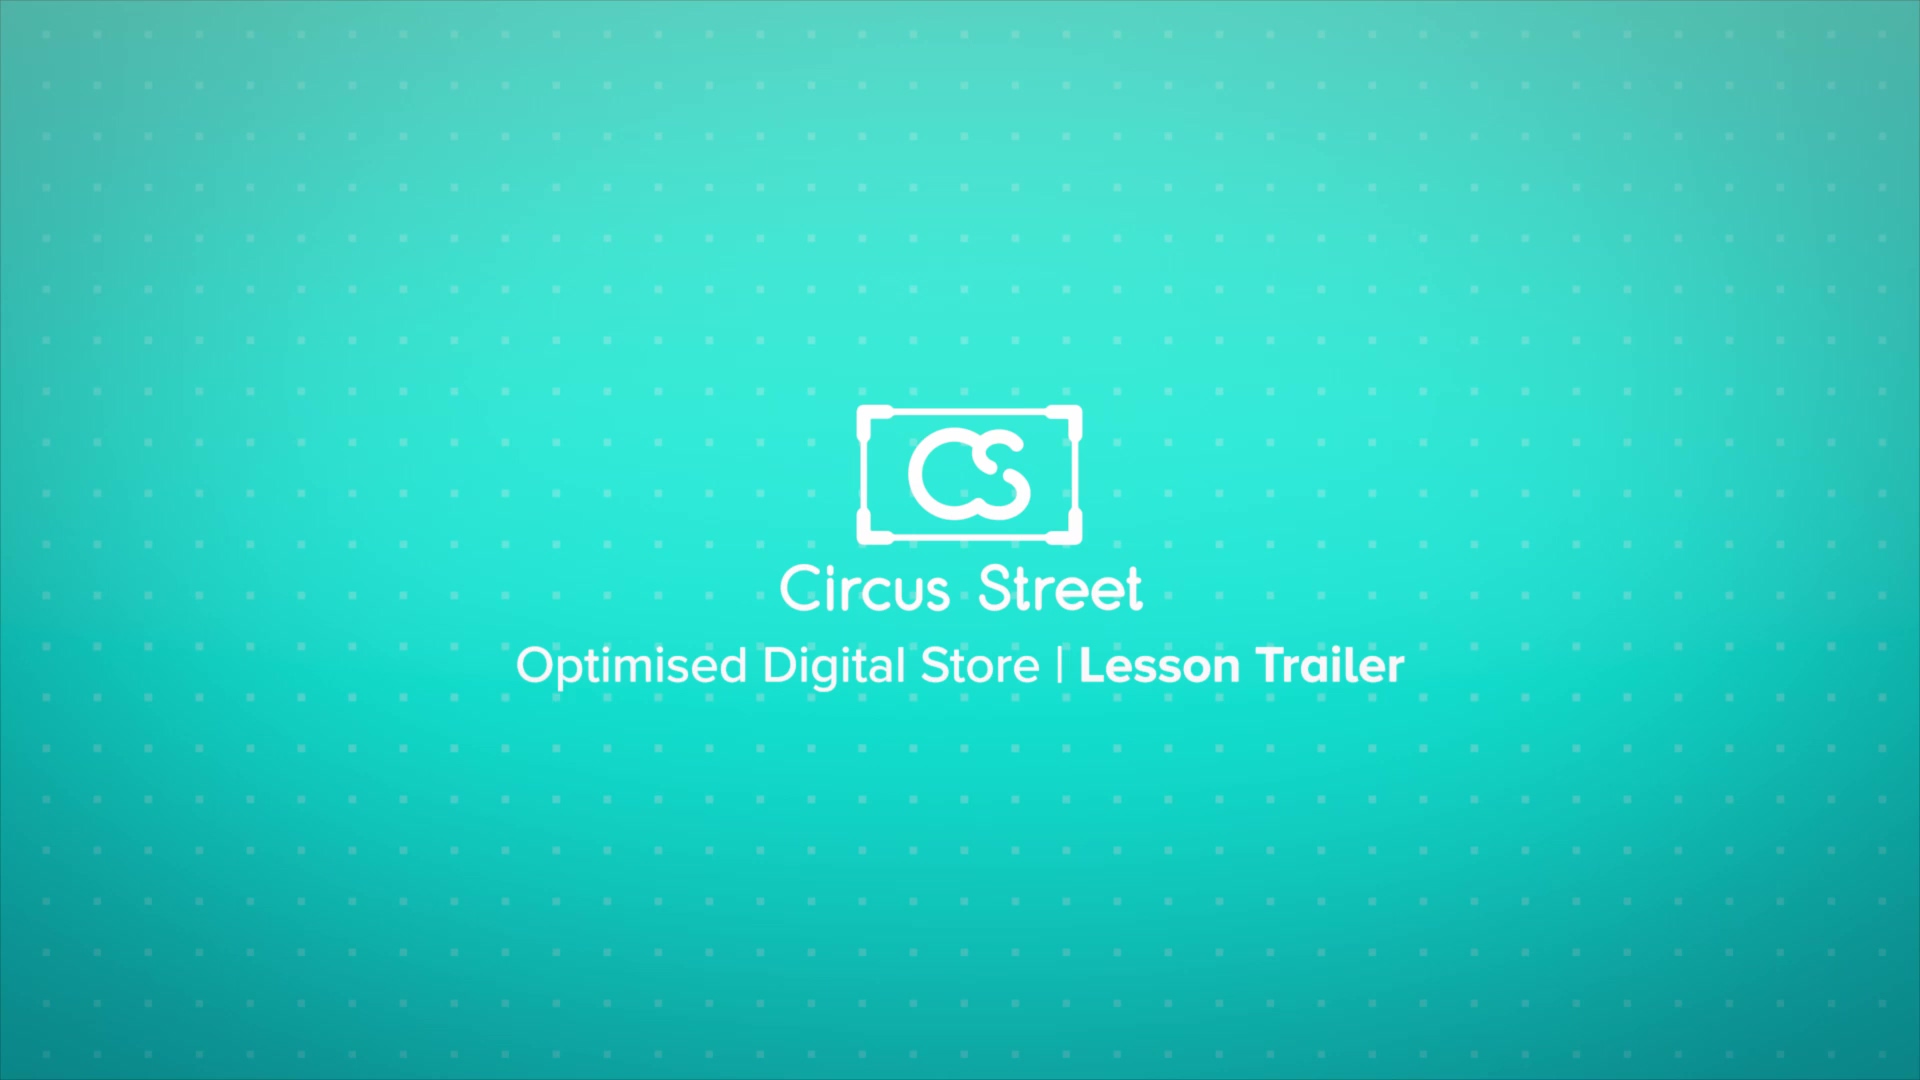 Optimised Digital Store Trailer